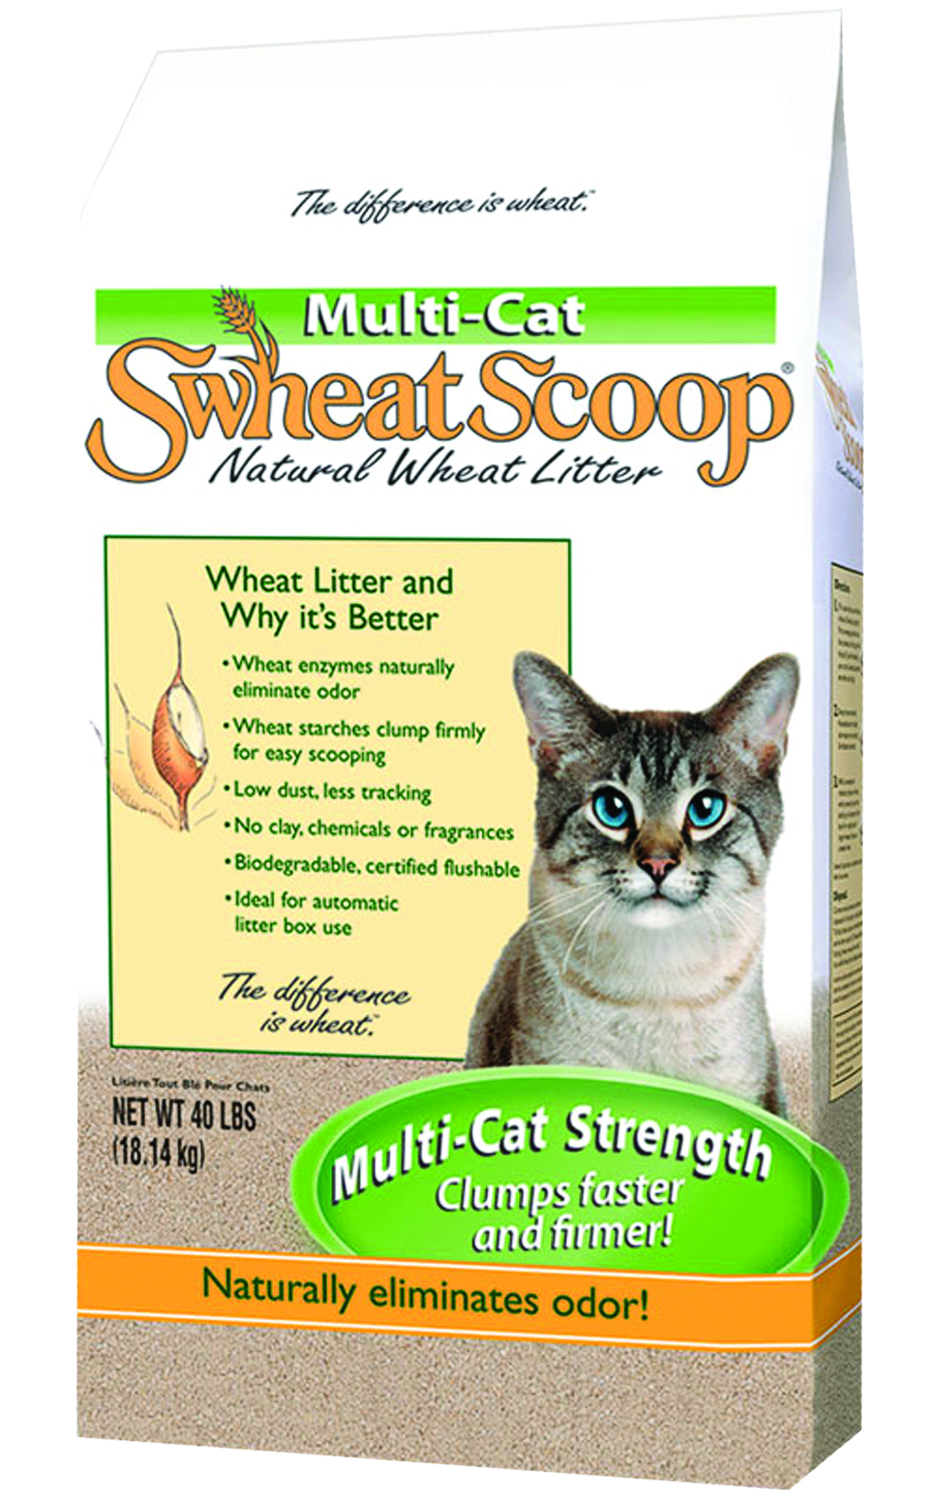 SWHEAT SCOOP MULTI CAT LITTER